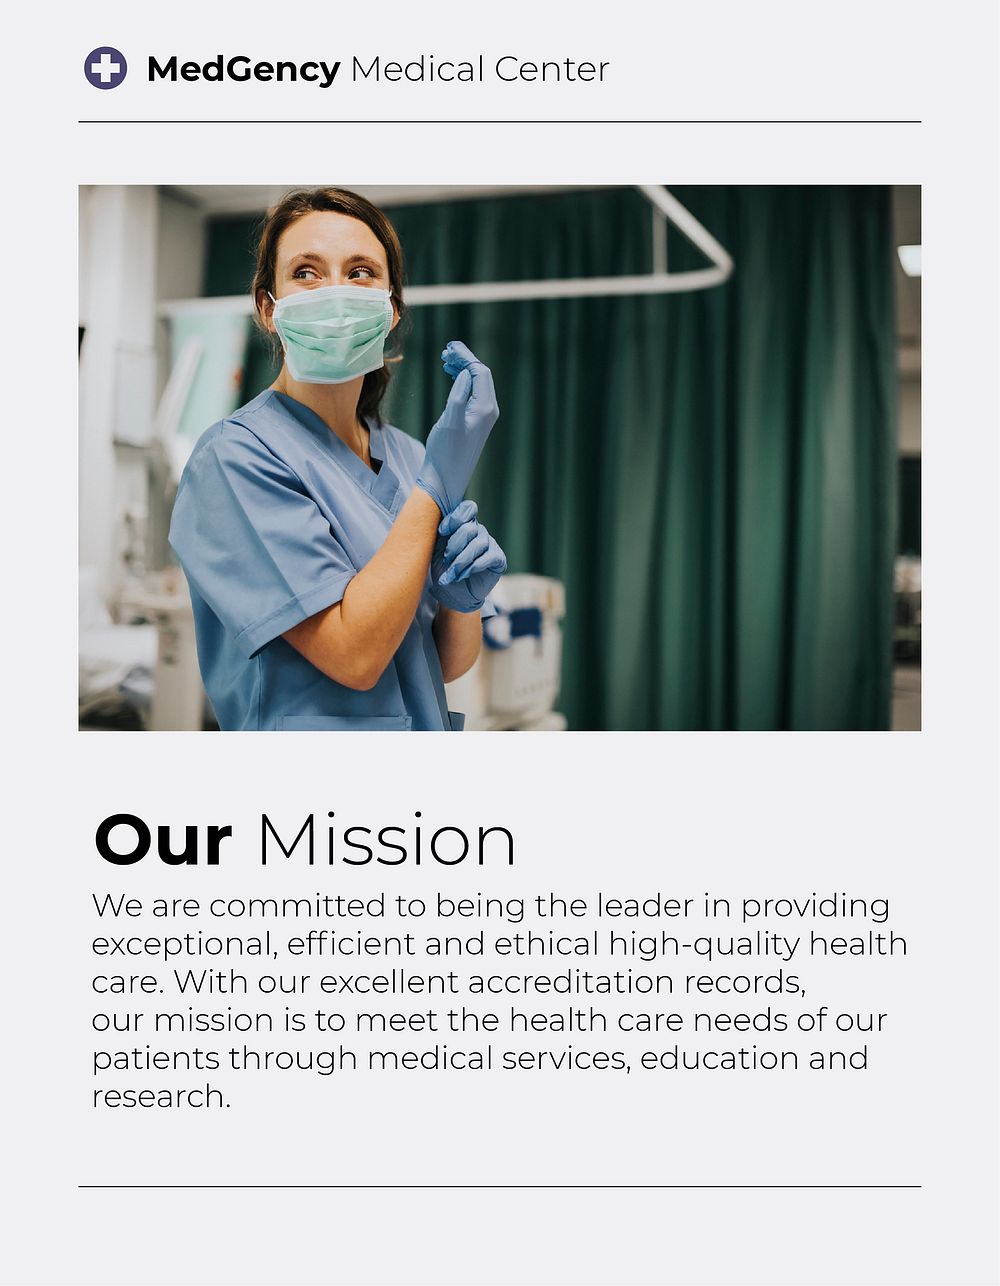 Hospital mission statement flyer template, medical business psd